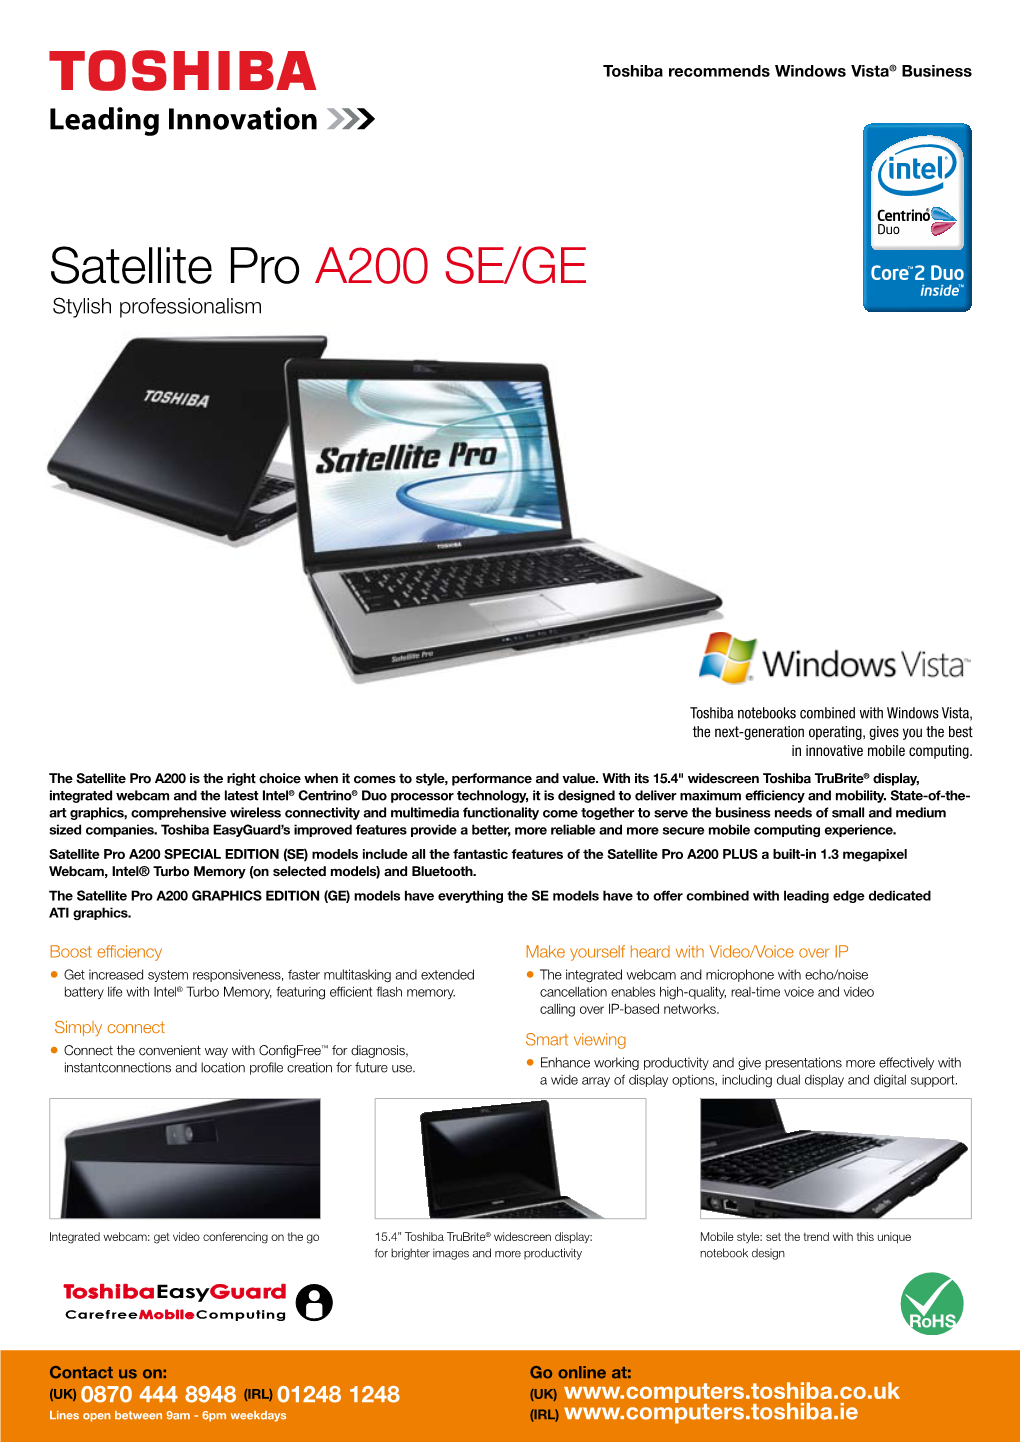 Satellite Pro A200 SE/GE Stylish Professionalism